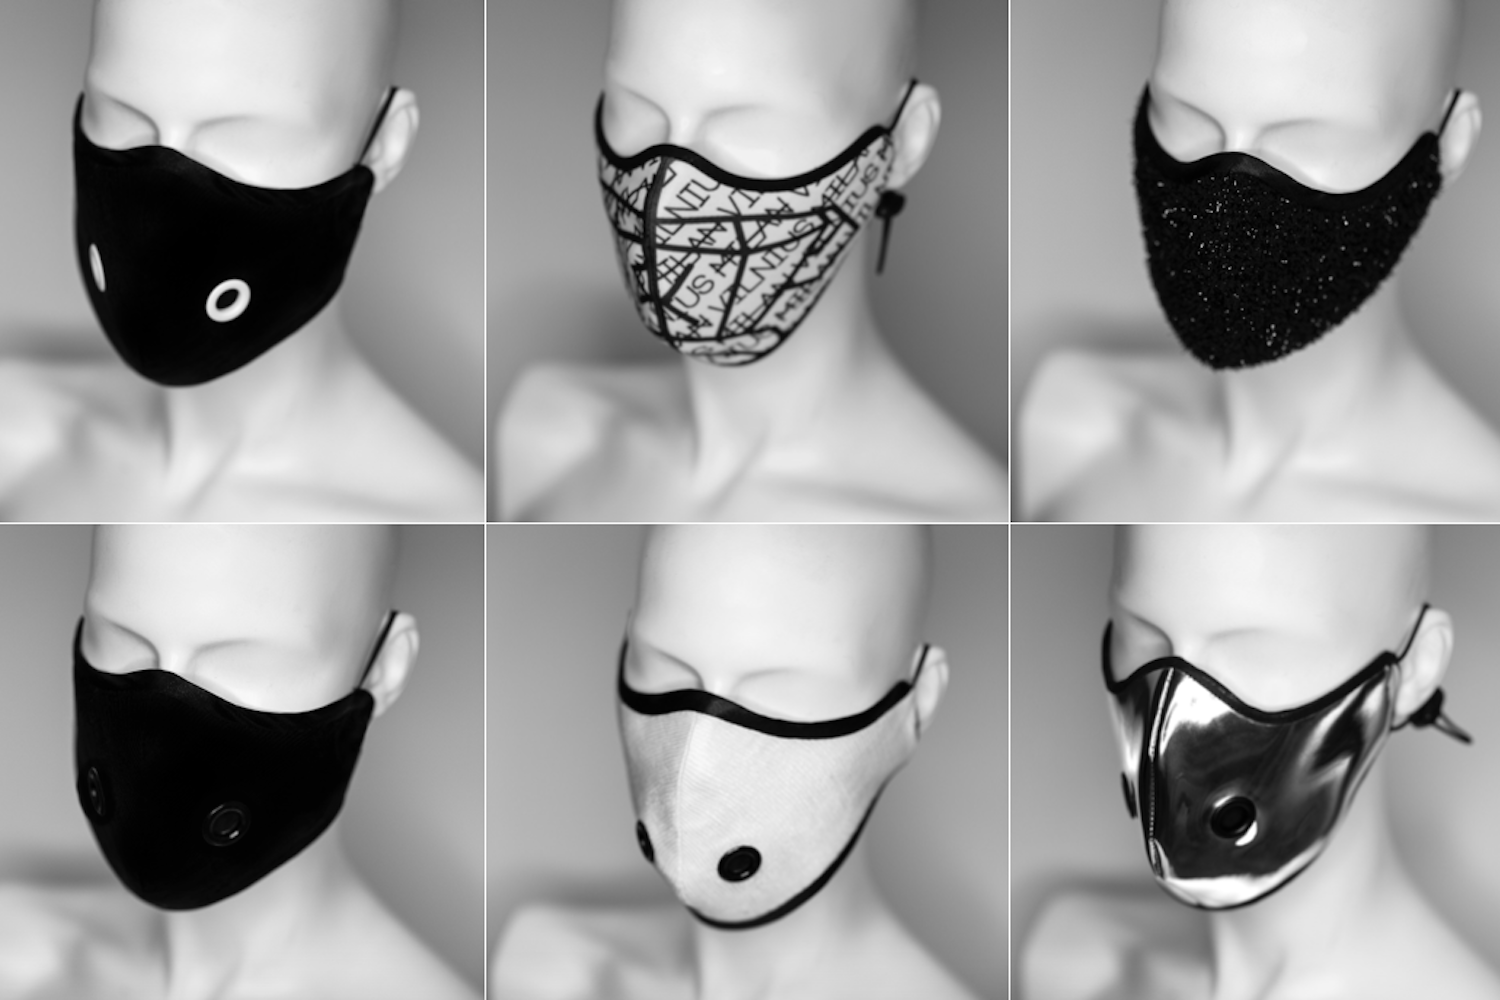 Robert Kalinkin's collection of fashion face masks, “Keep The Distance”